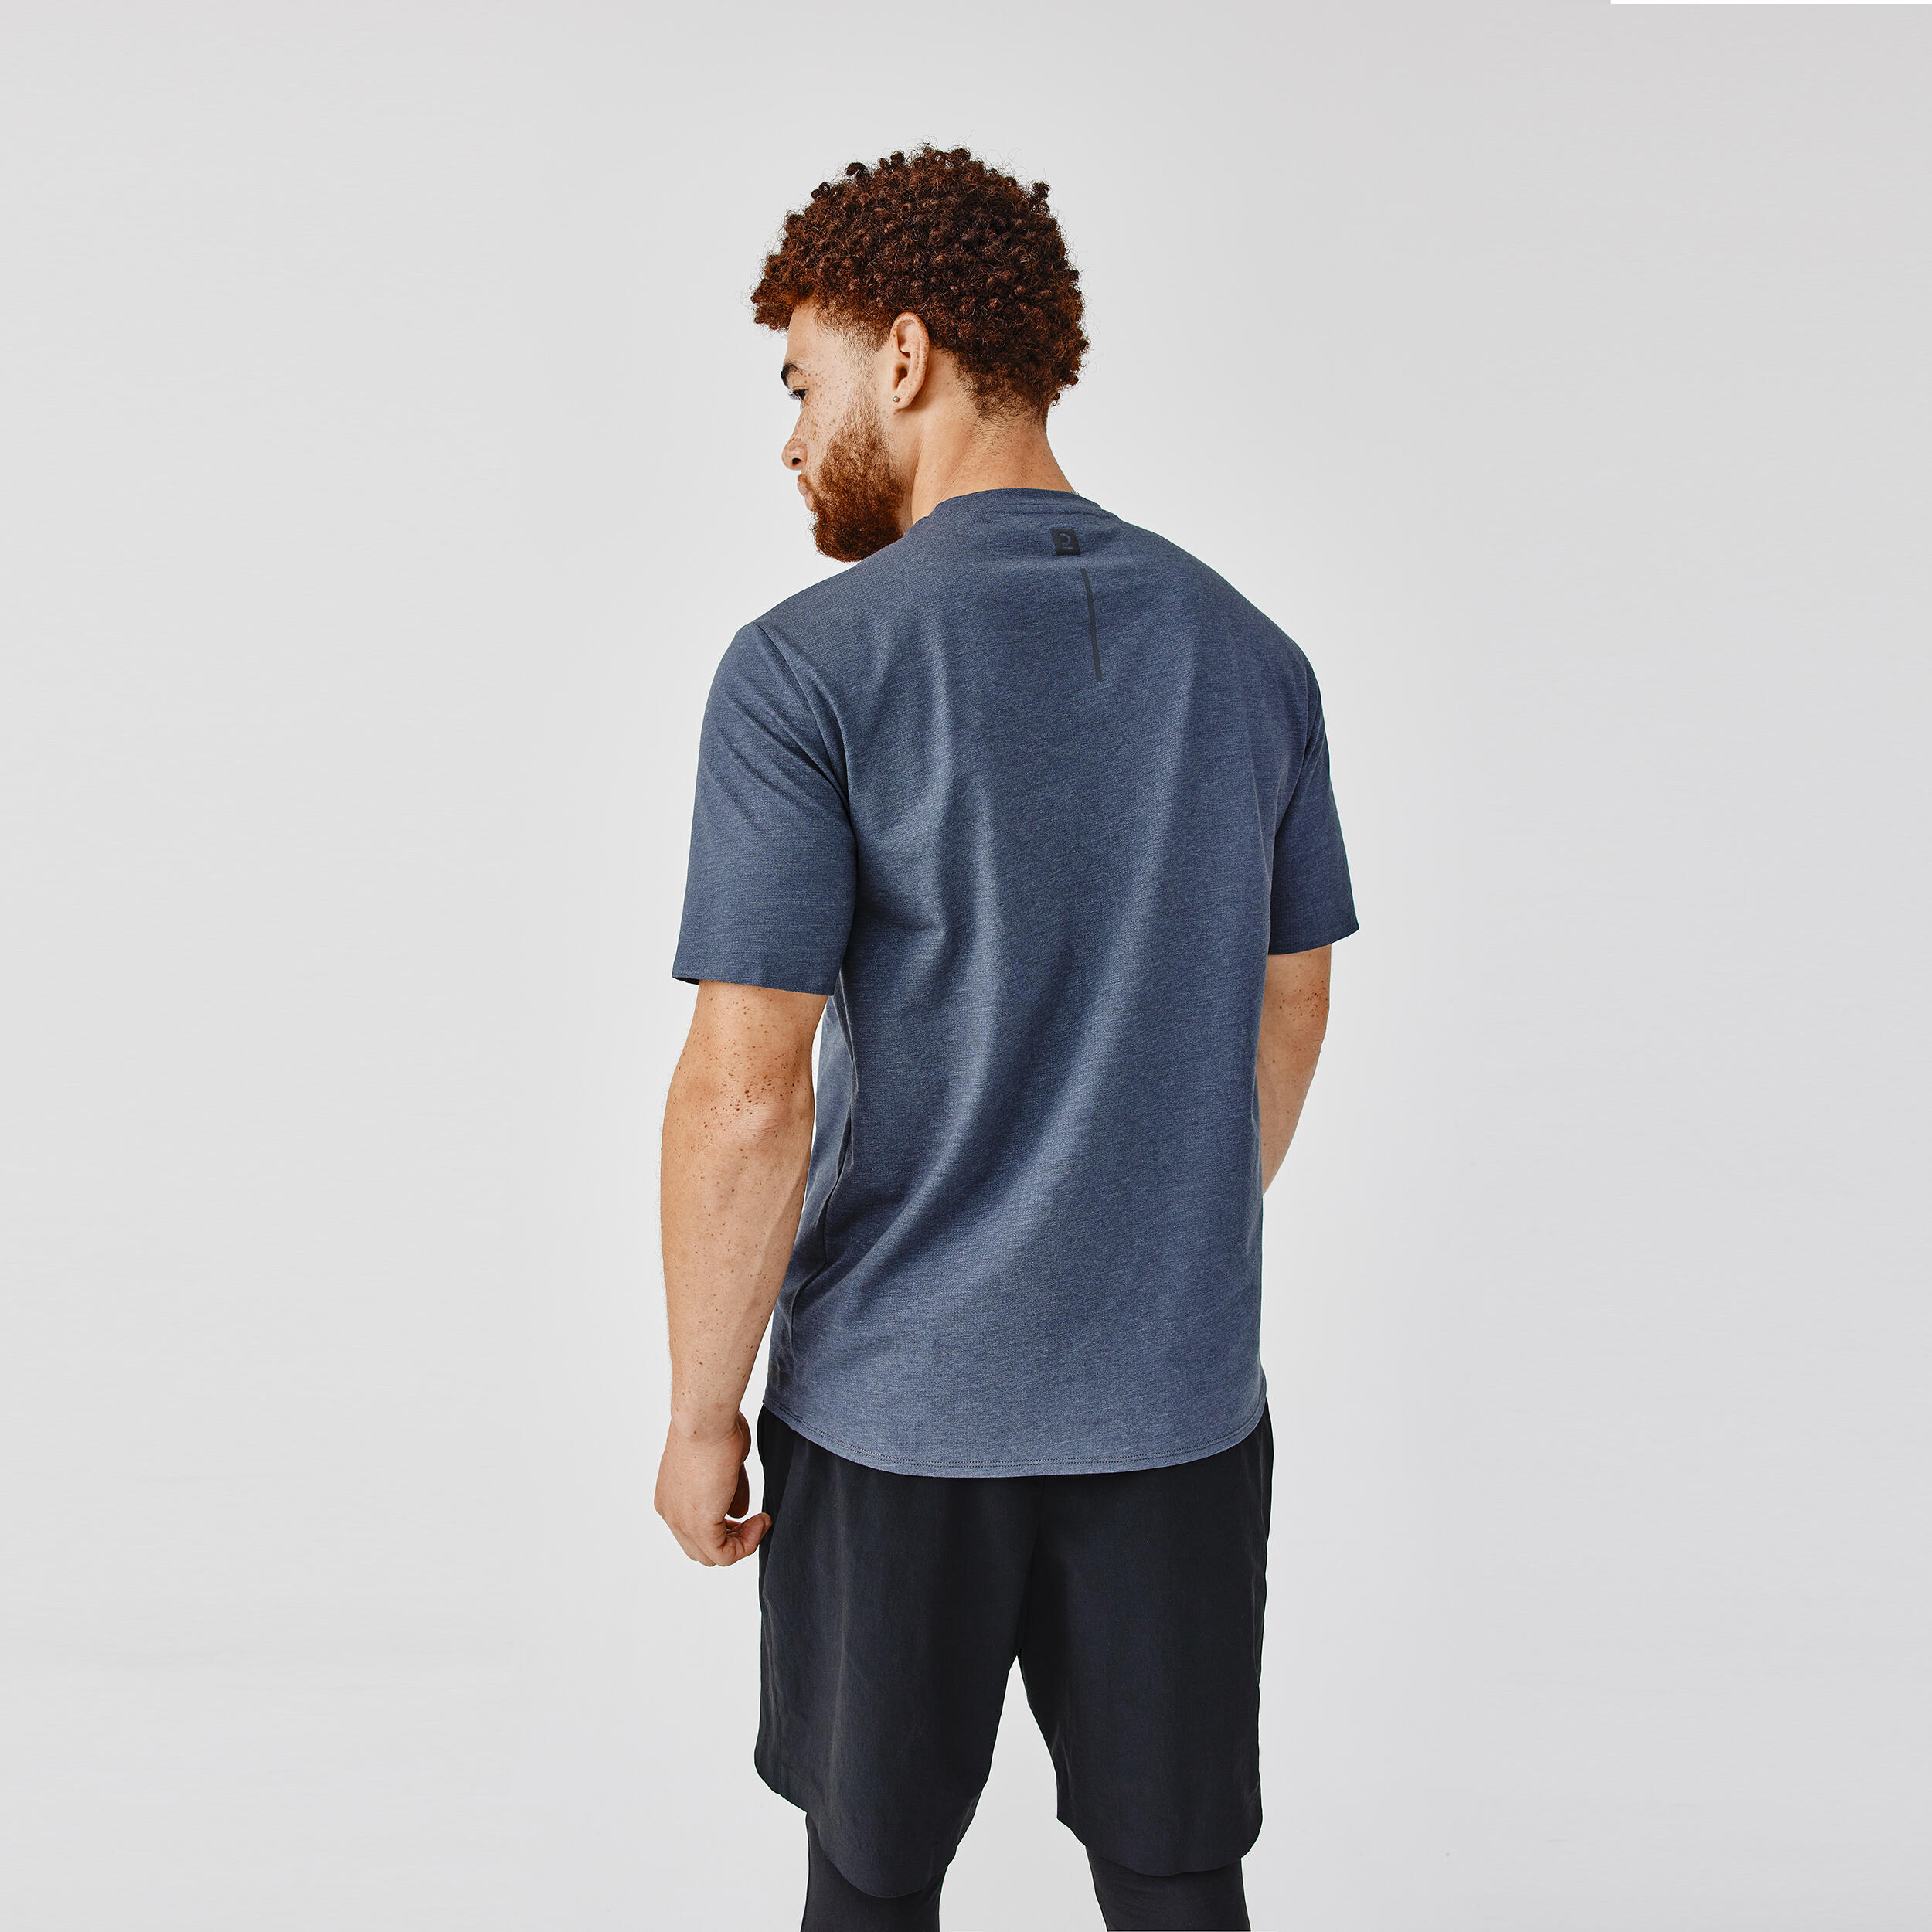 Men's Breathable T-Shirt Soft - grey blue 3/7